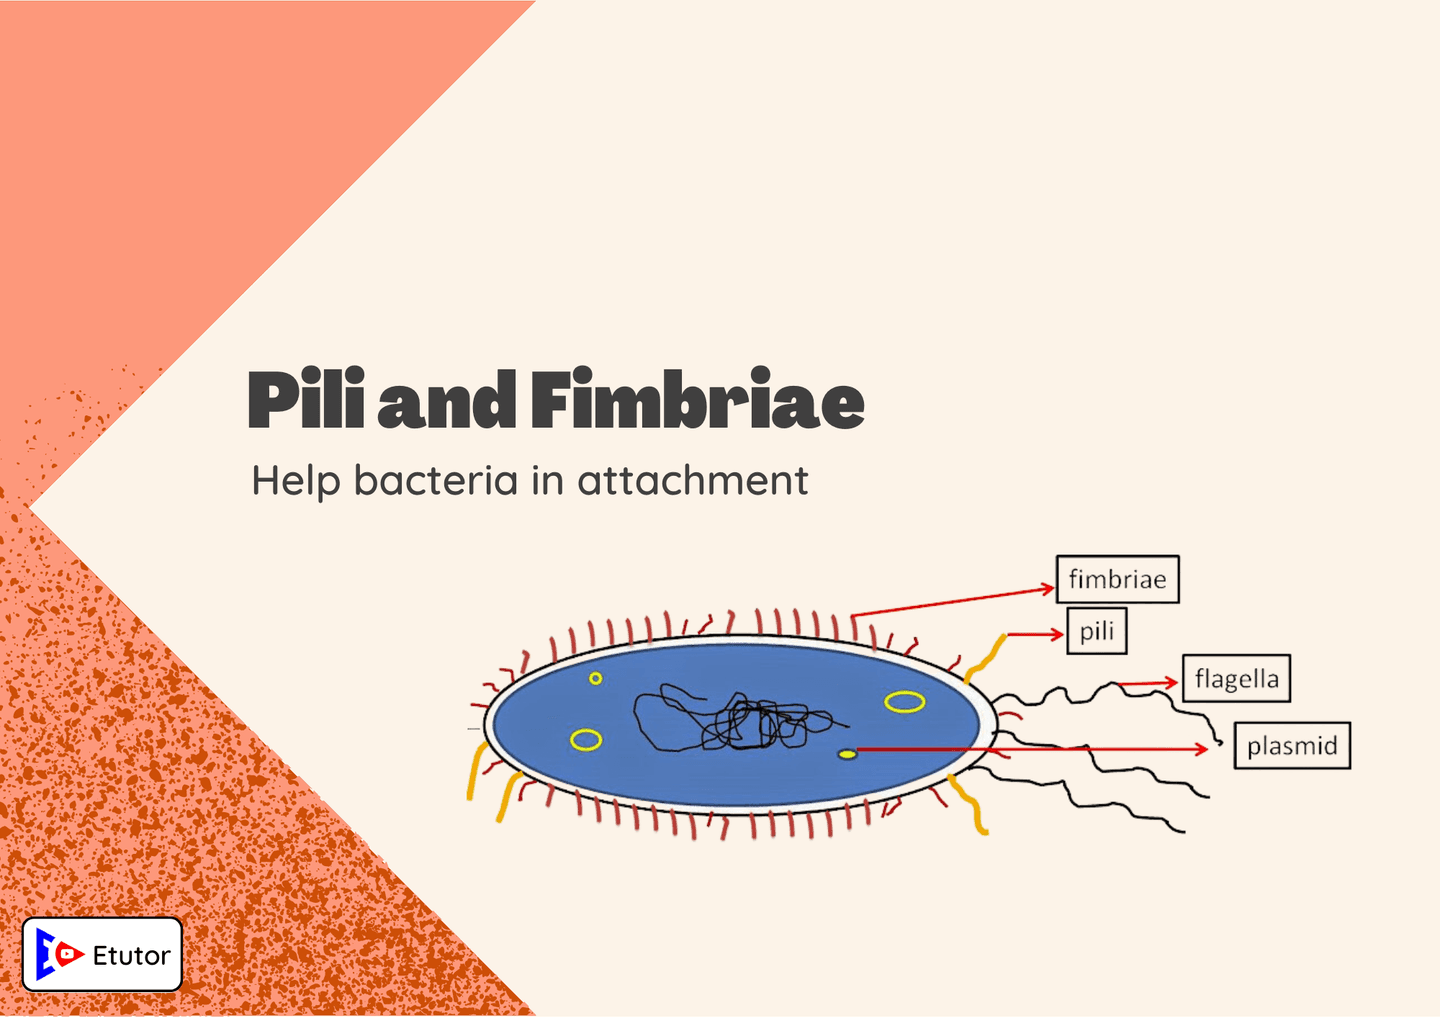 pilli and fimbriae